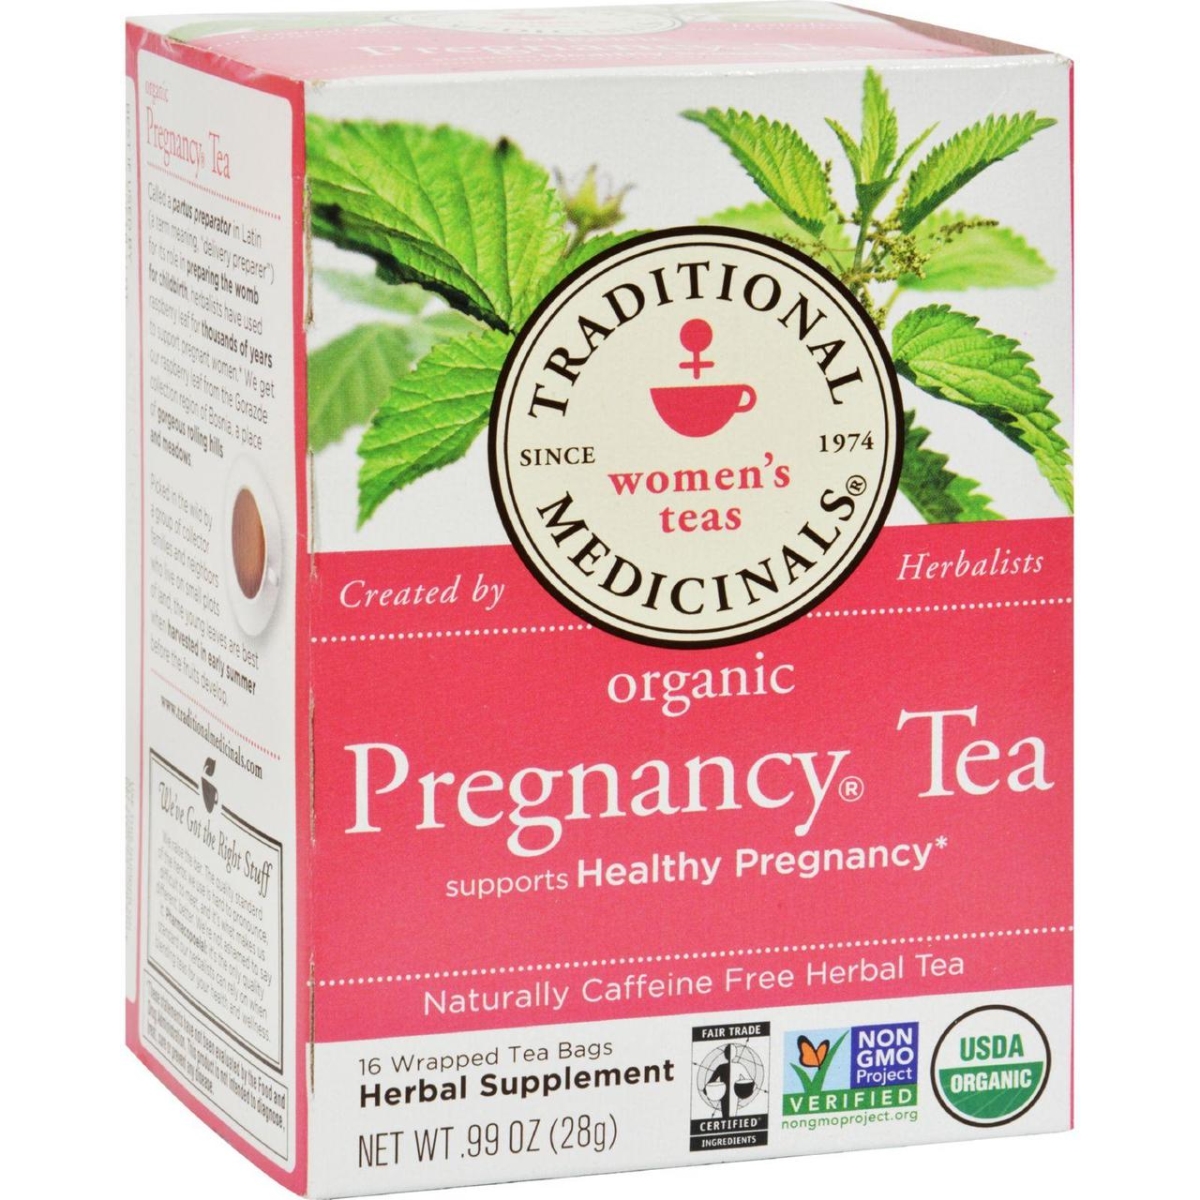 Hg0650804 Organic Pregnancy Herbal Tea, 16 Tea Bags - Case Of 6